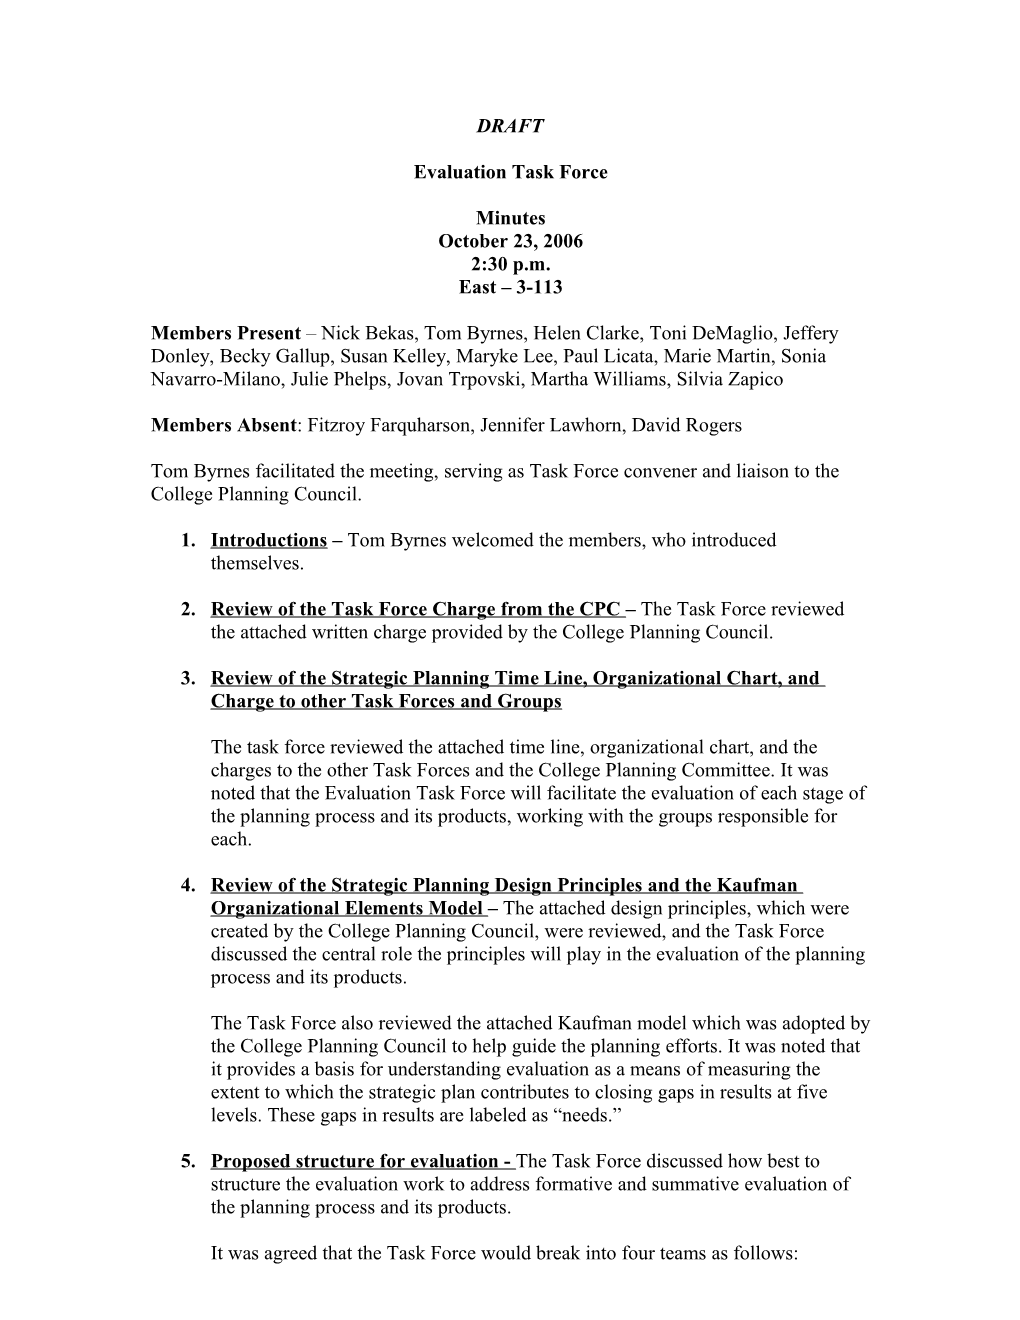 Evaluation Task Force Minutes, October 23, 2006